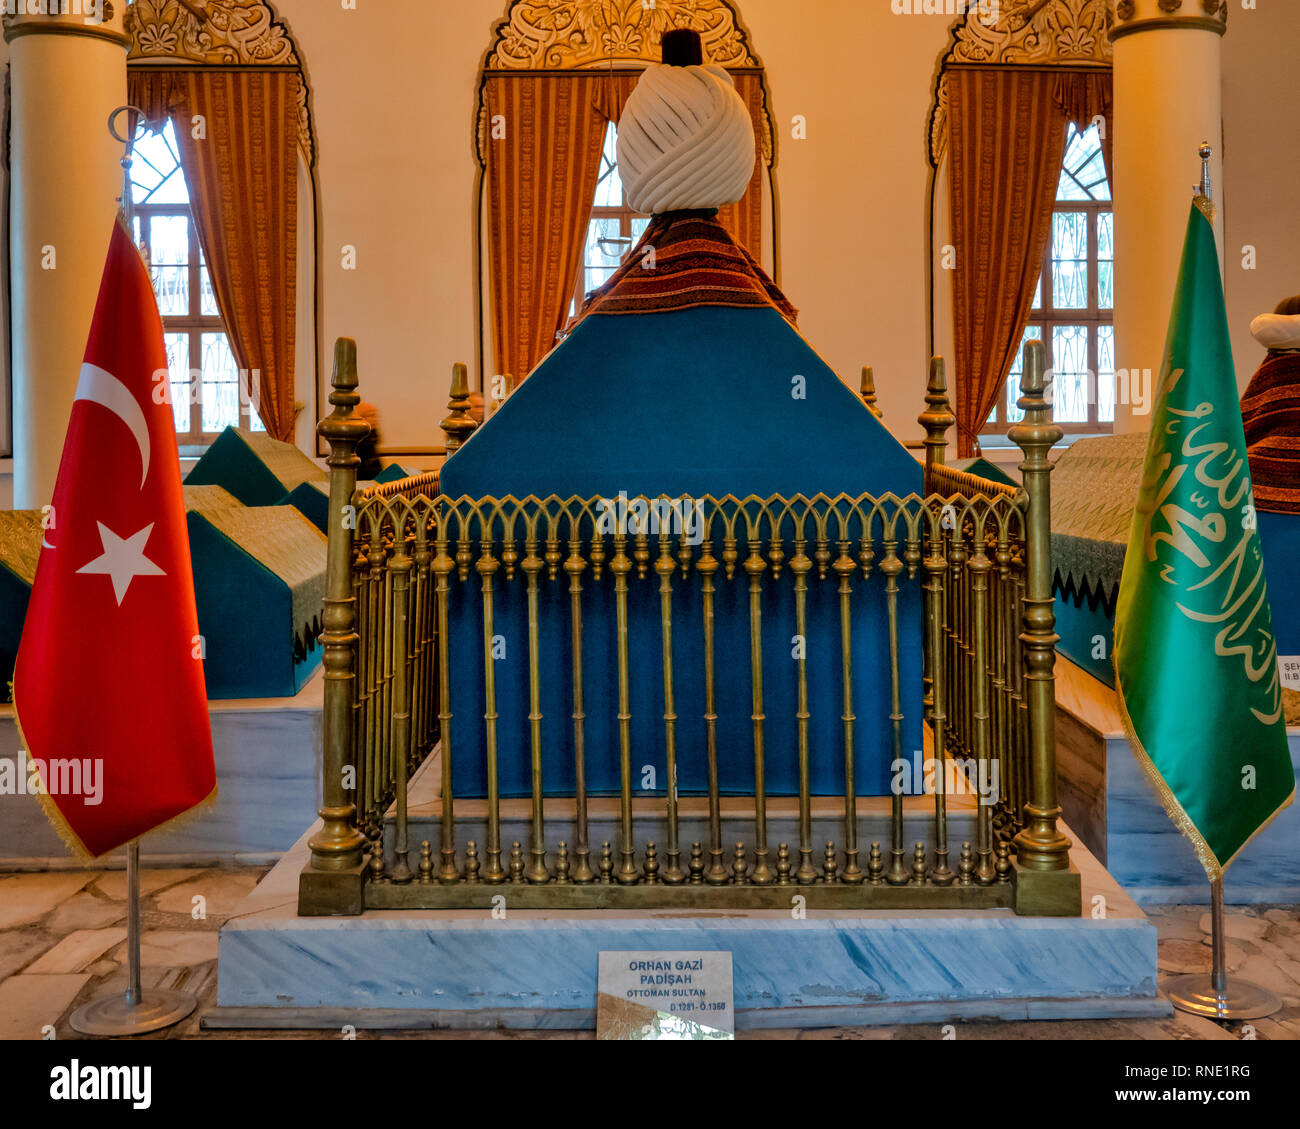 The türbe (mausoleum) of Orhan Gazi, Bursa, Turkey Stock Photo